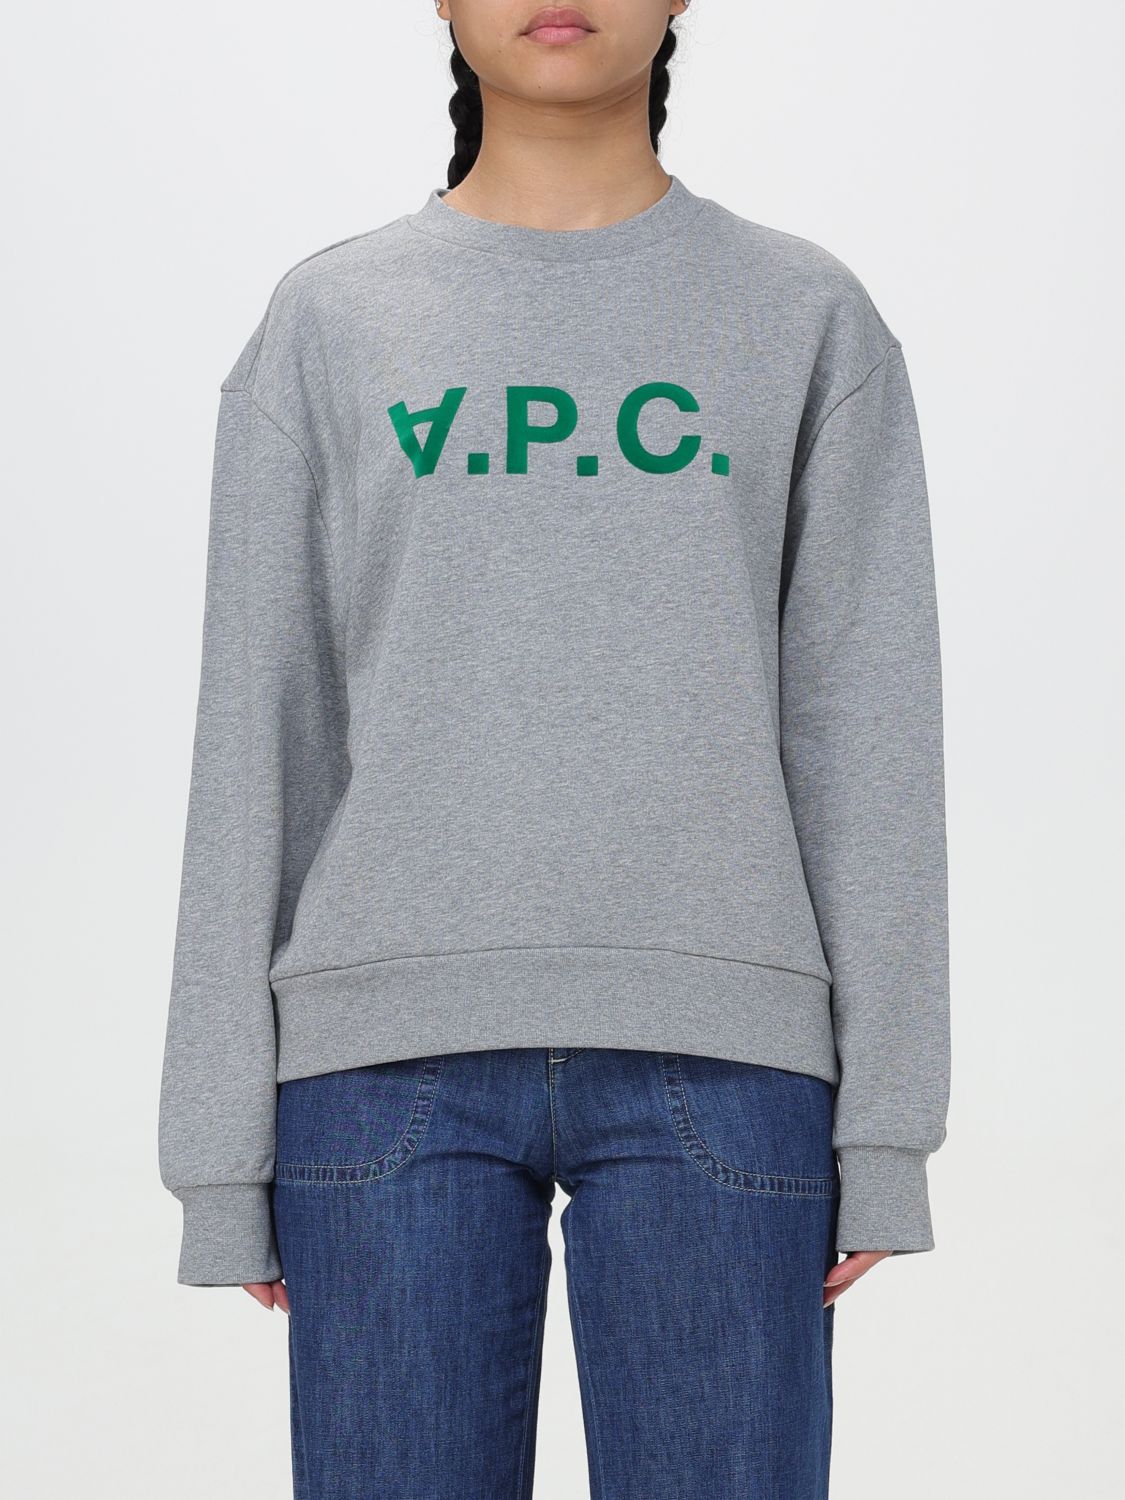 Shop Apc Sweatshirt A.p.c. Woman Color Grey